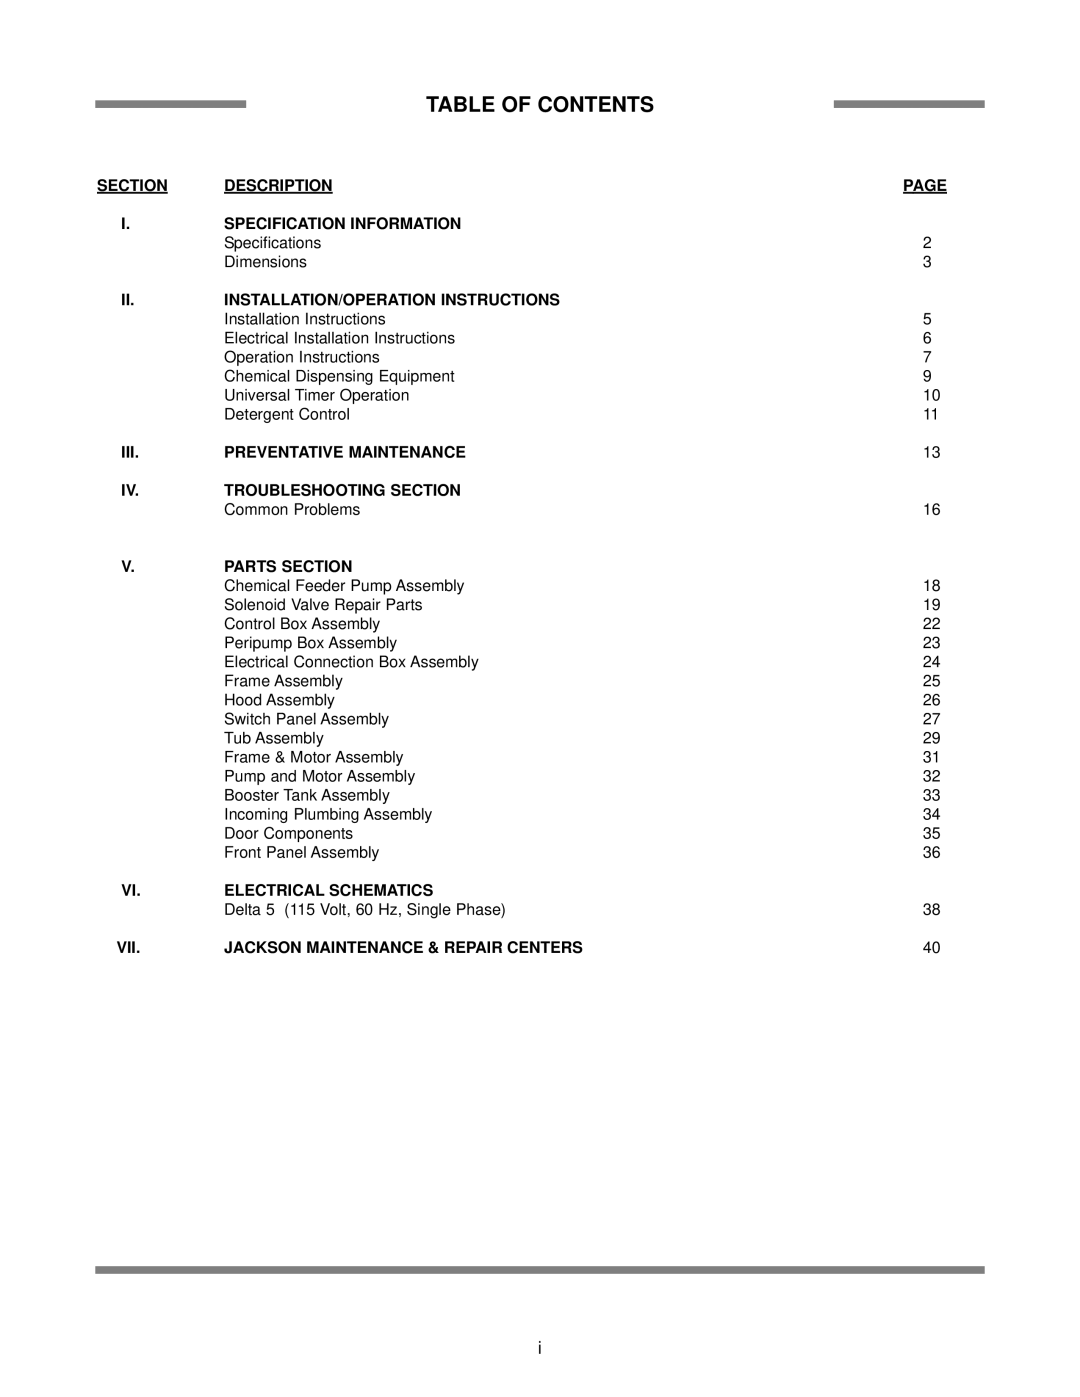 Jackson Delta 5 Table Of Contents, Section, Description, Page, I. Specification Information, Preventative Maintenance 